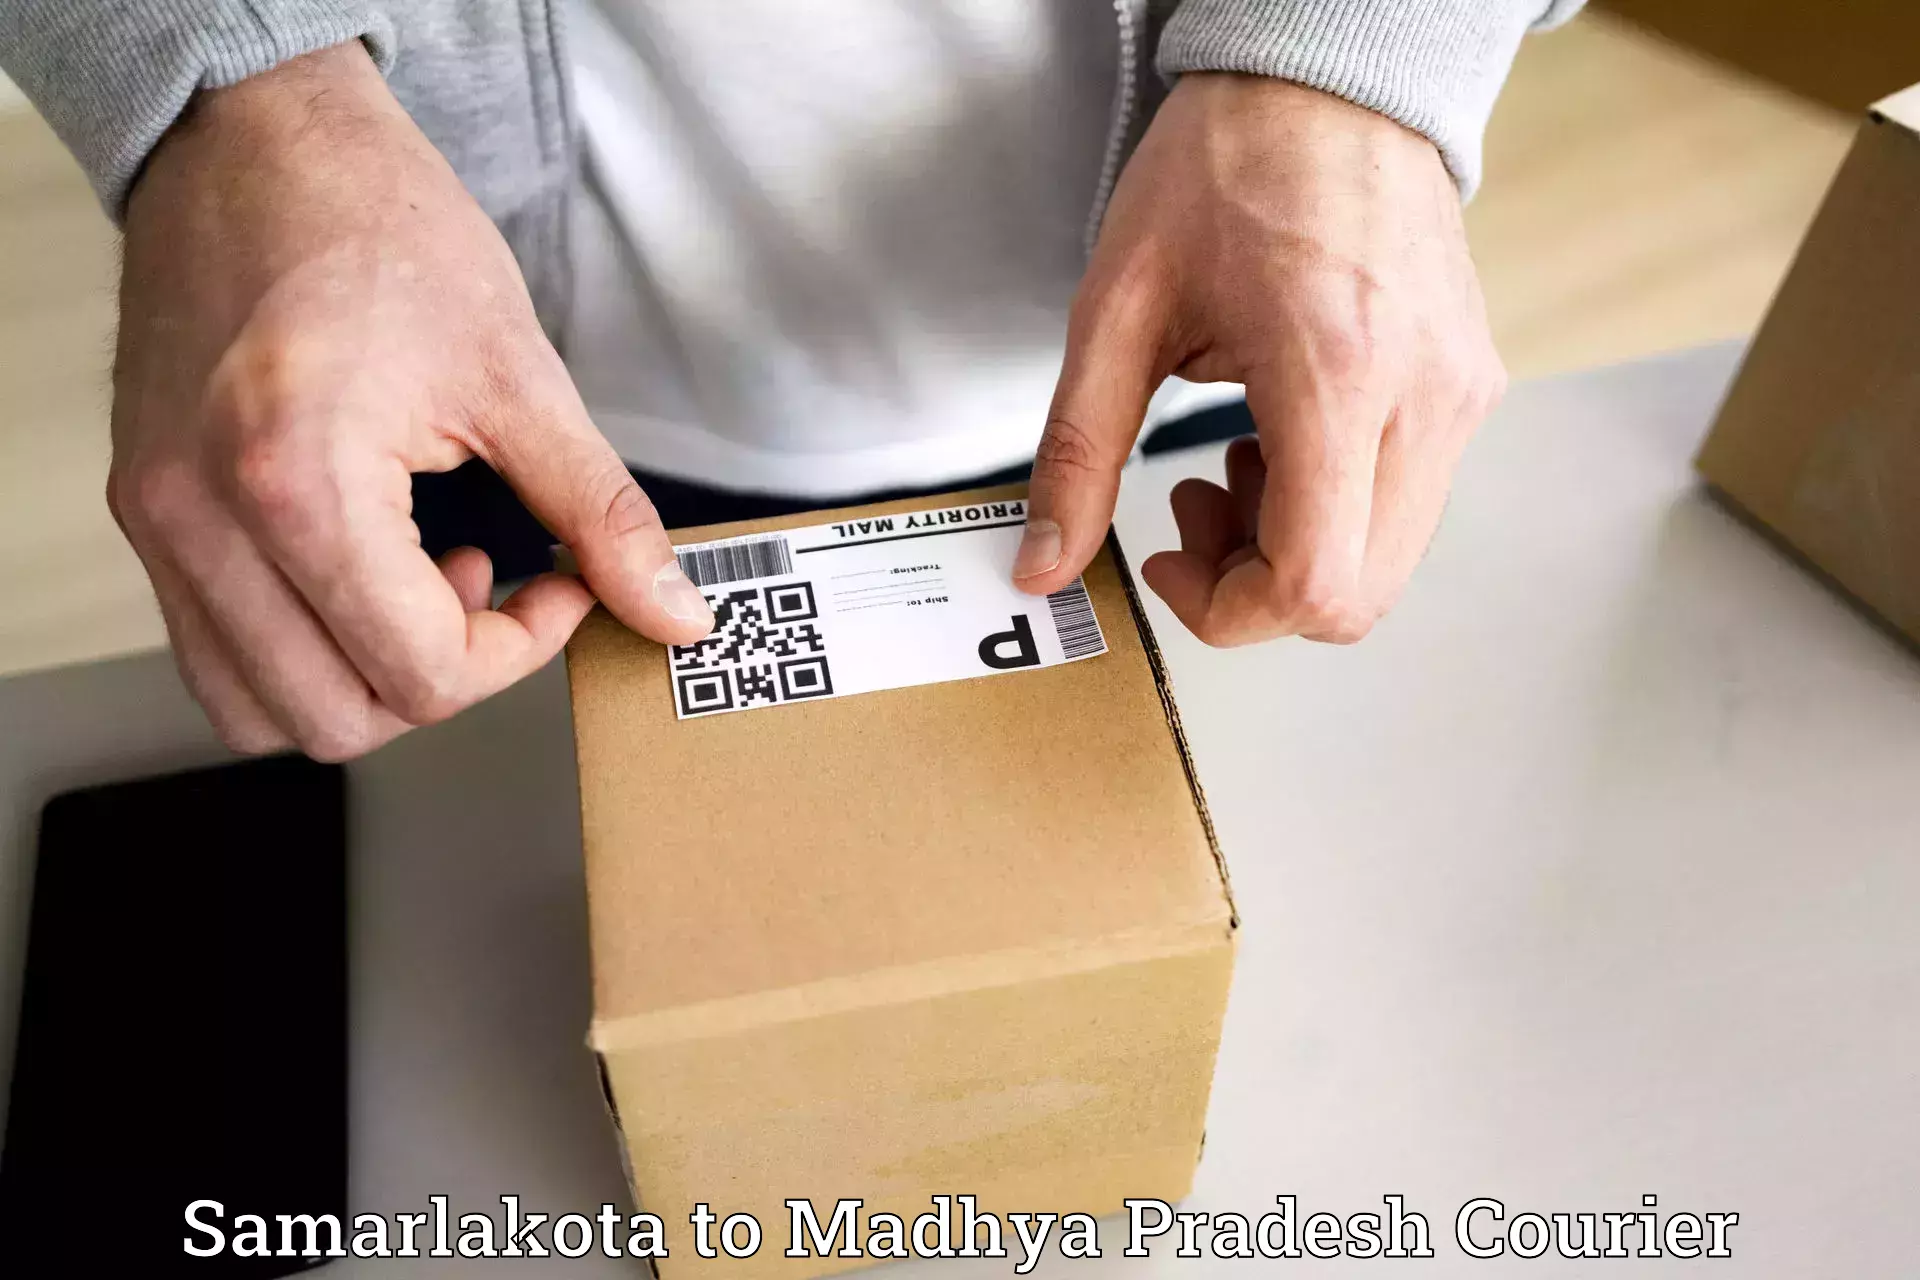 Lightweight parcel options Samarlakota to Maheshwar